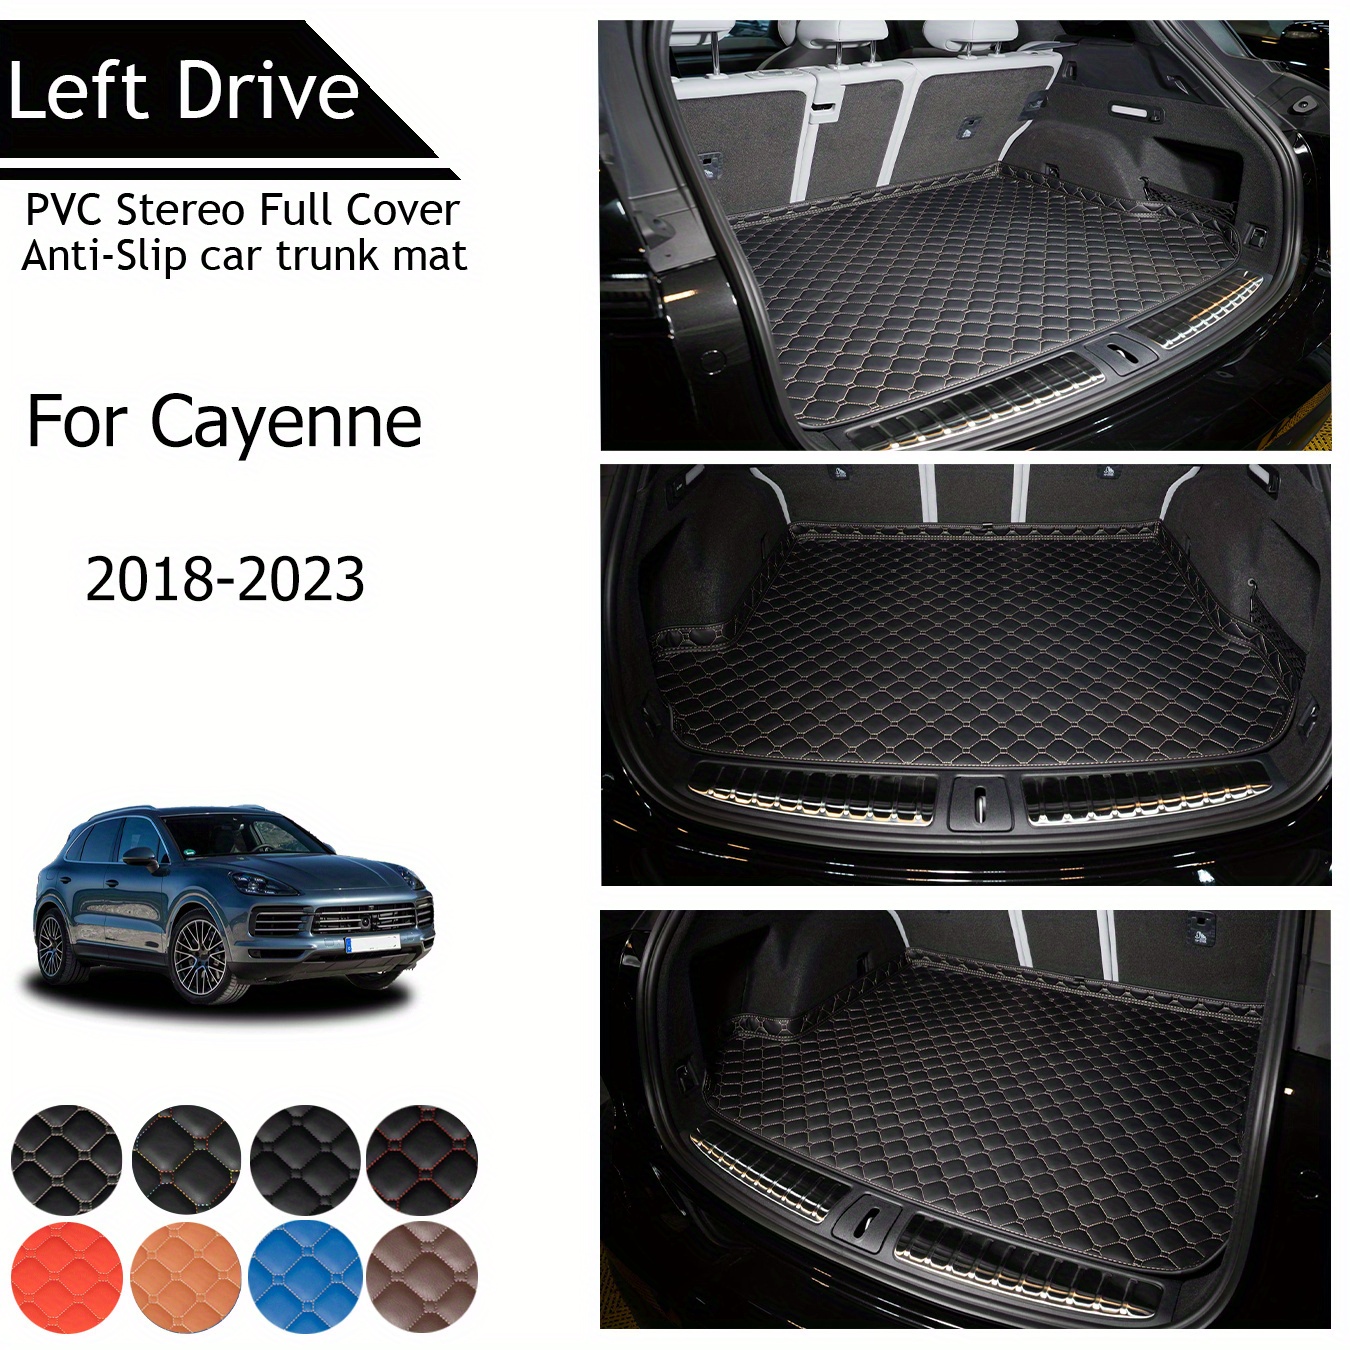 

Tegart [lhd] For Cayenne For 2018-2023 3 Layer Pvc Stereo Full Cover Anti-slip Car Trunk Mat